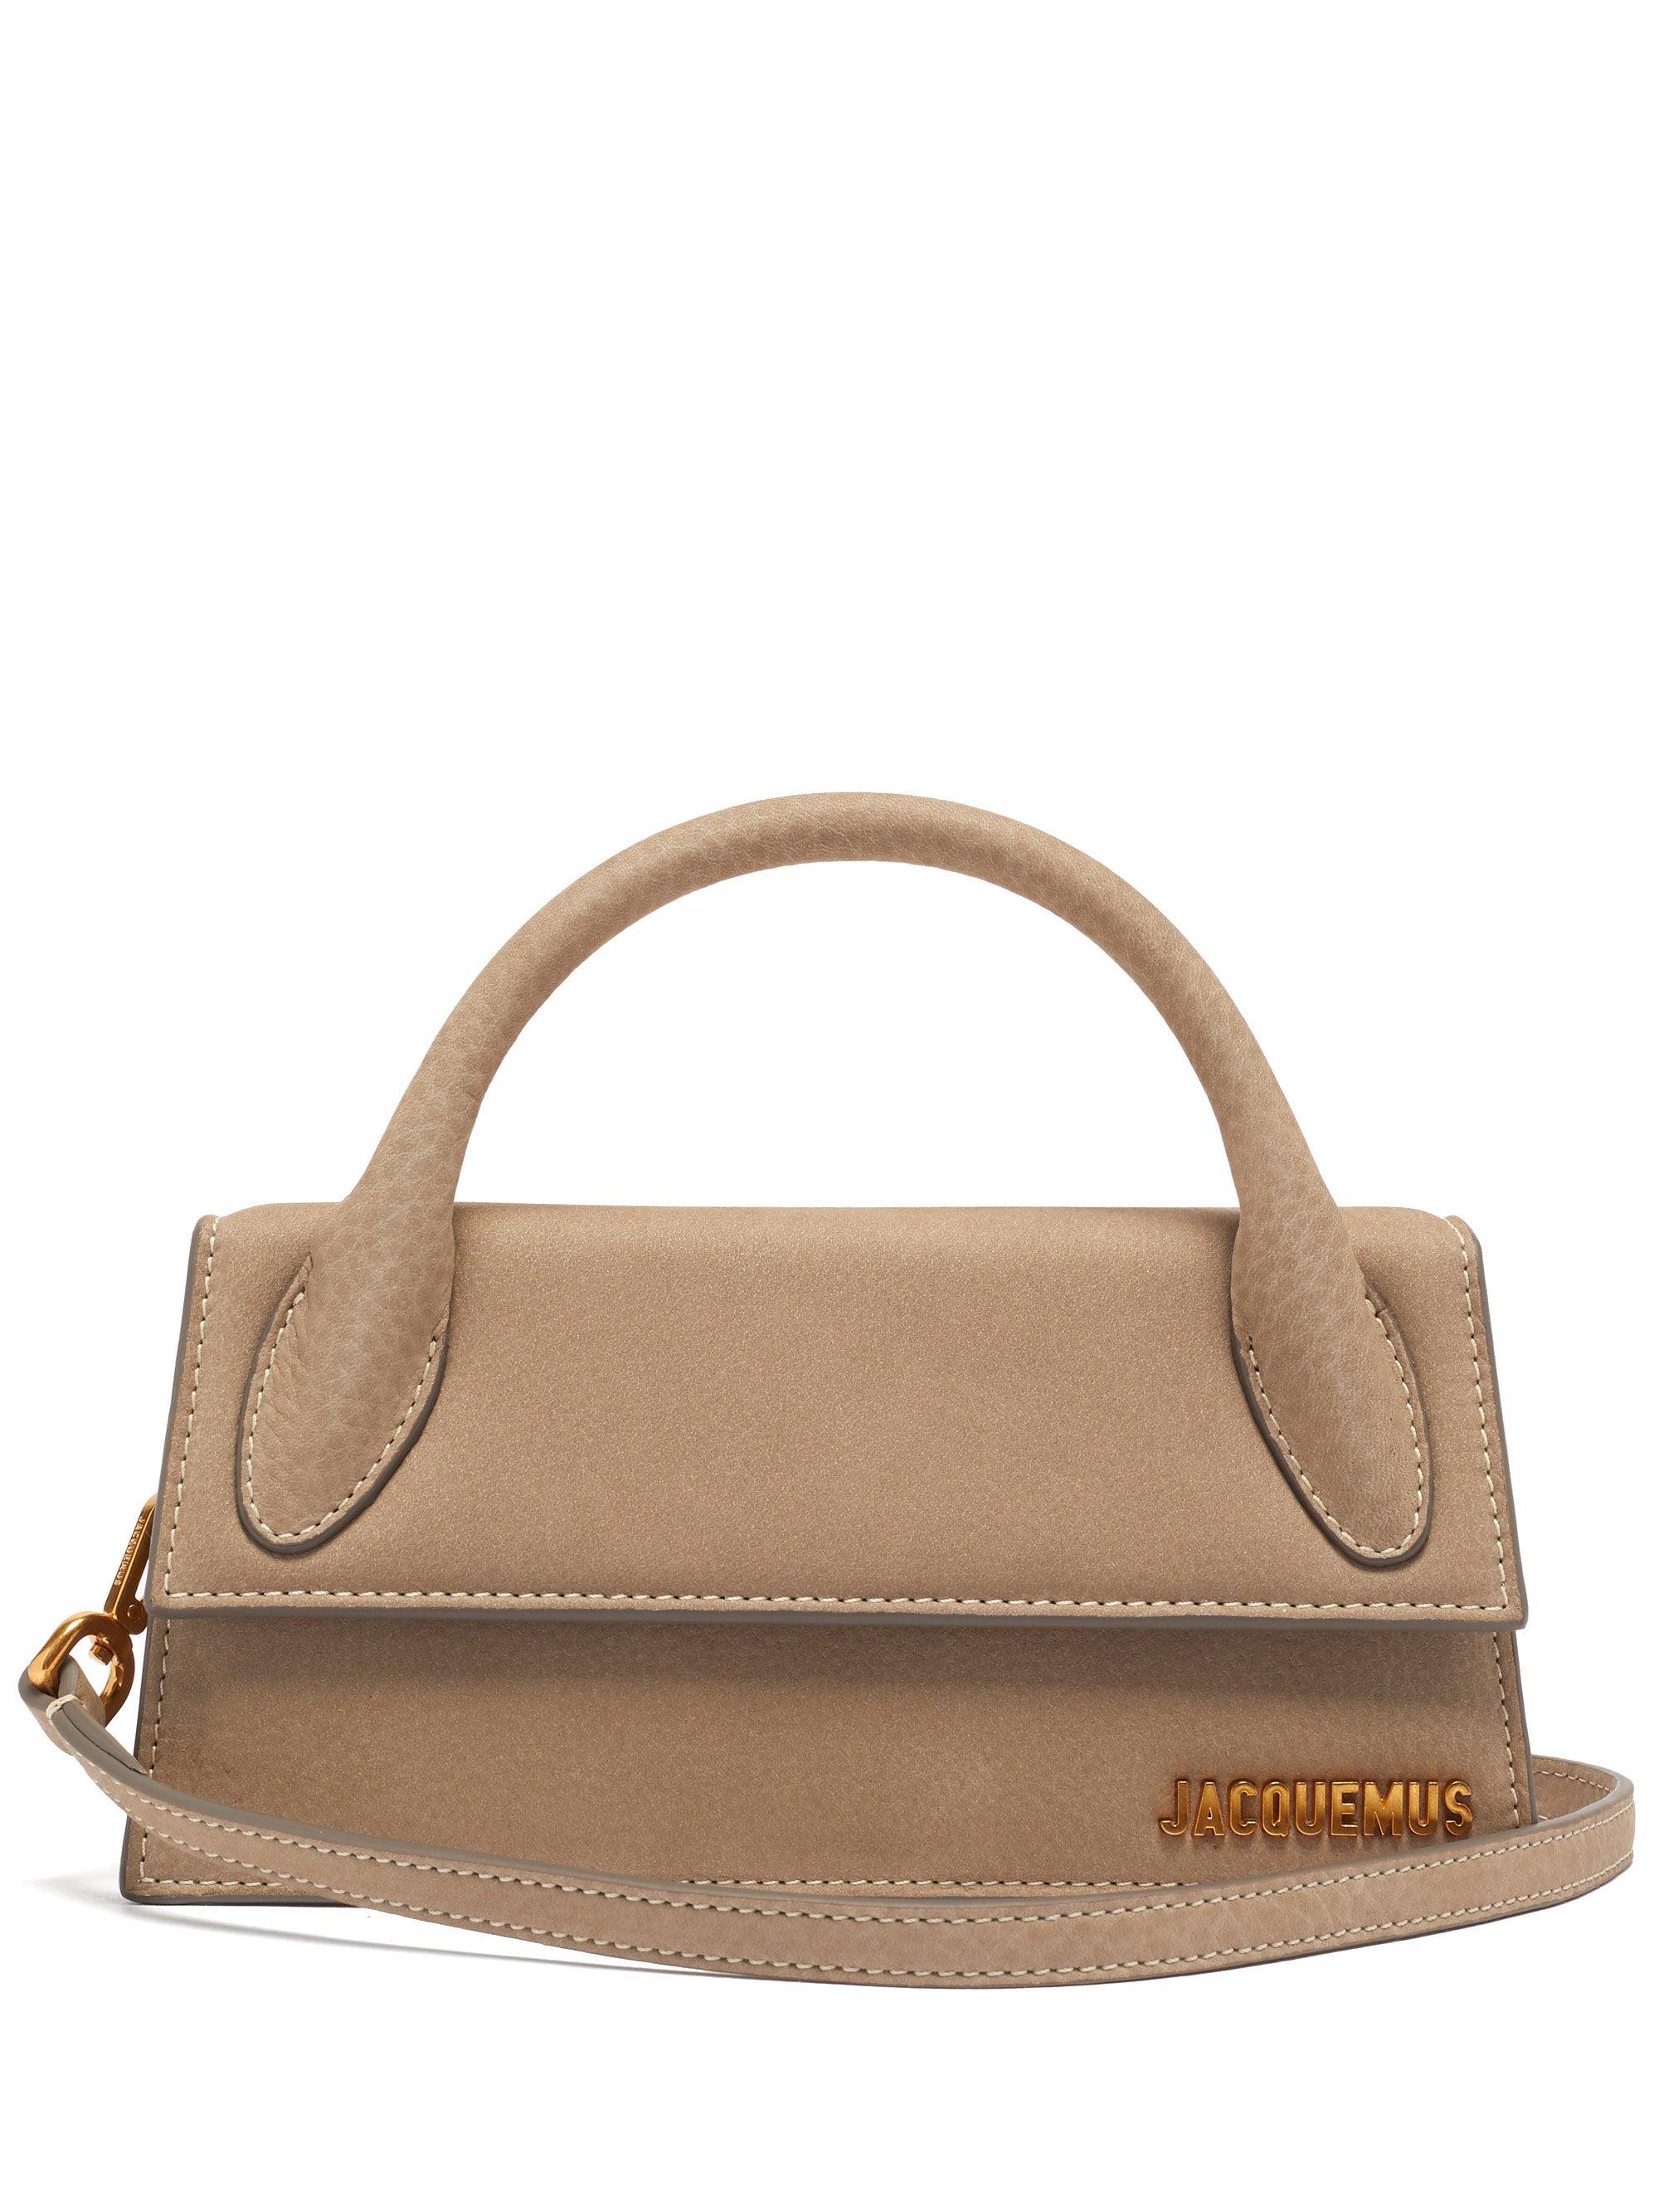 Jacquemus Handbag Le Chiquito Long Handle With OG Box Dust Bag